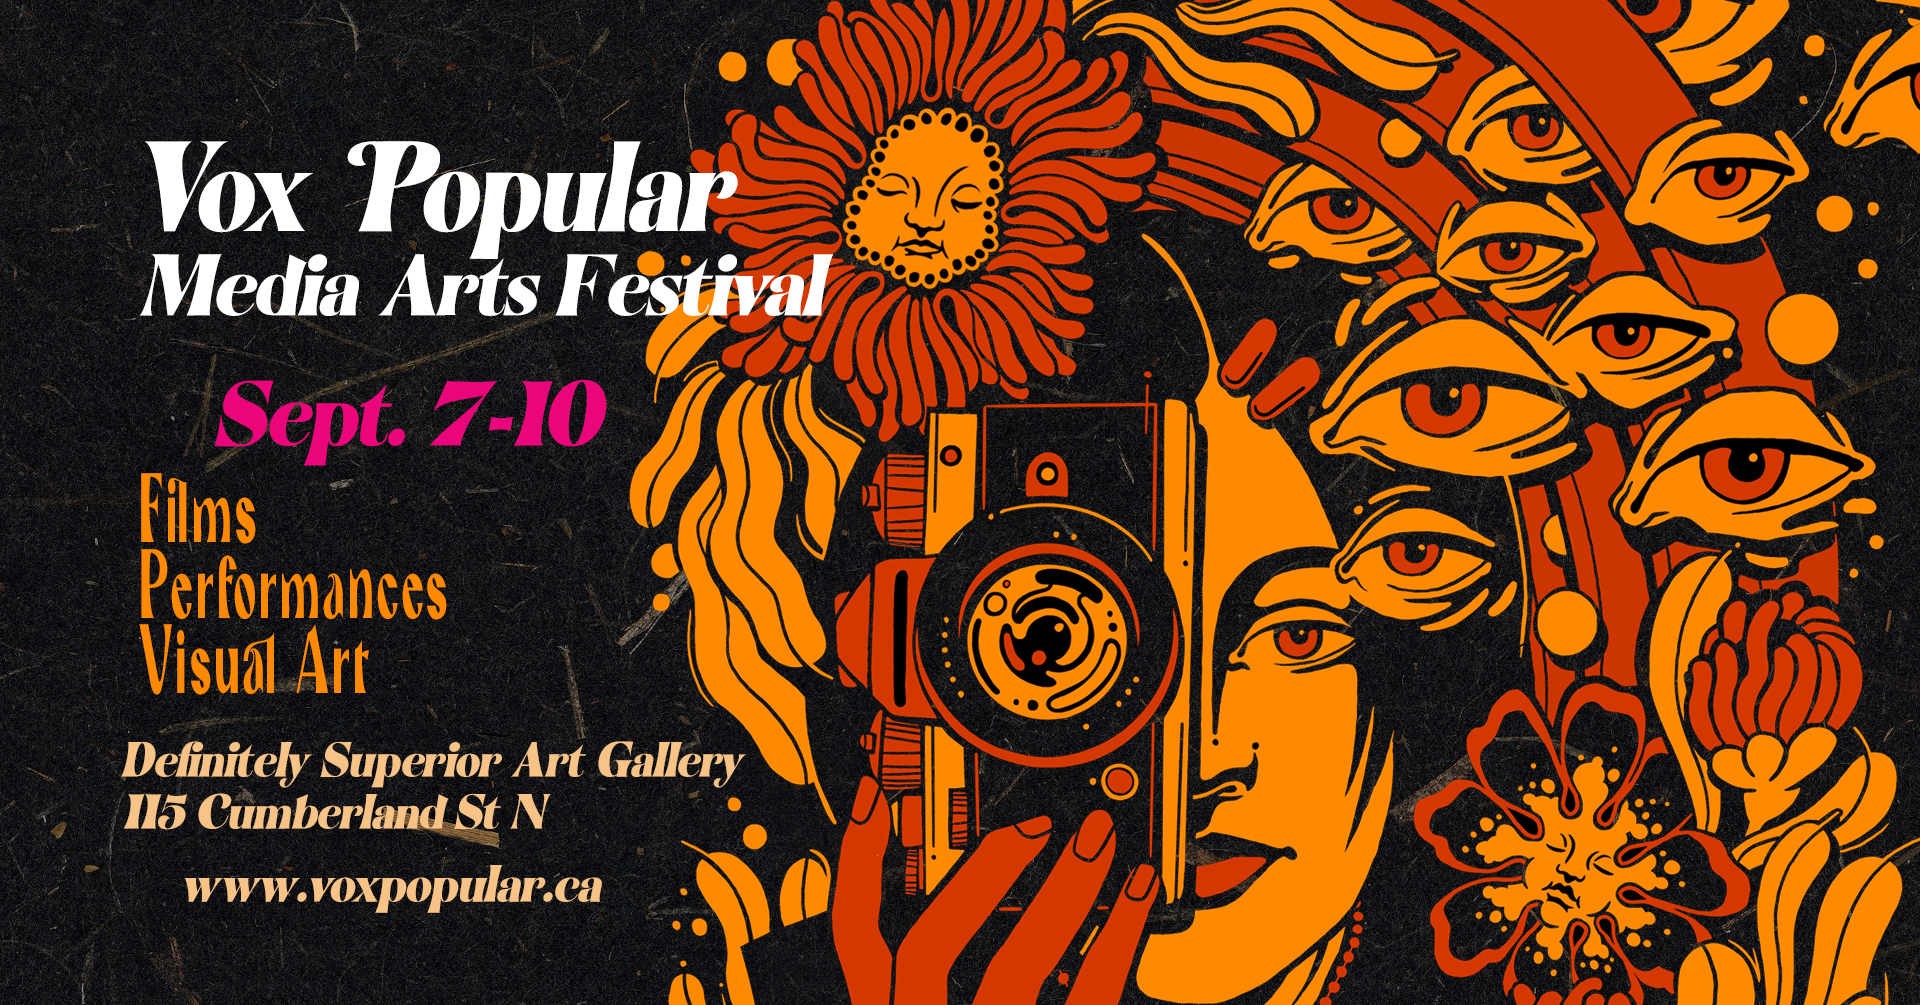 The 19th Annual Vox Popular Media Arts Festival